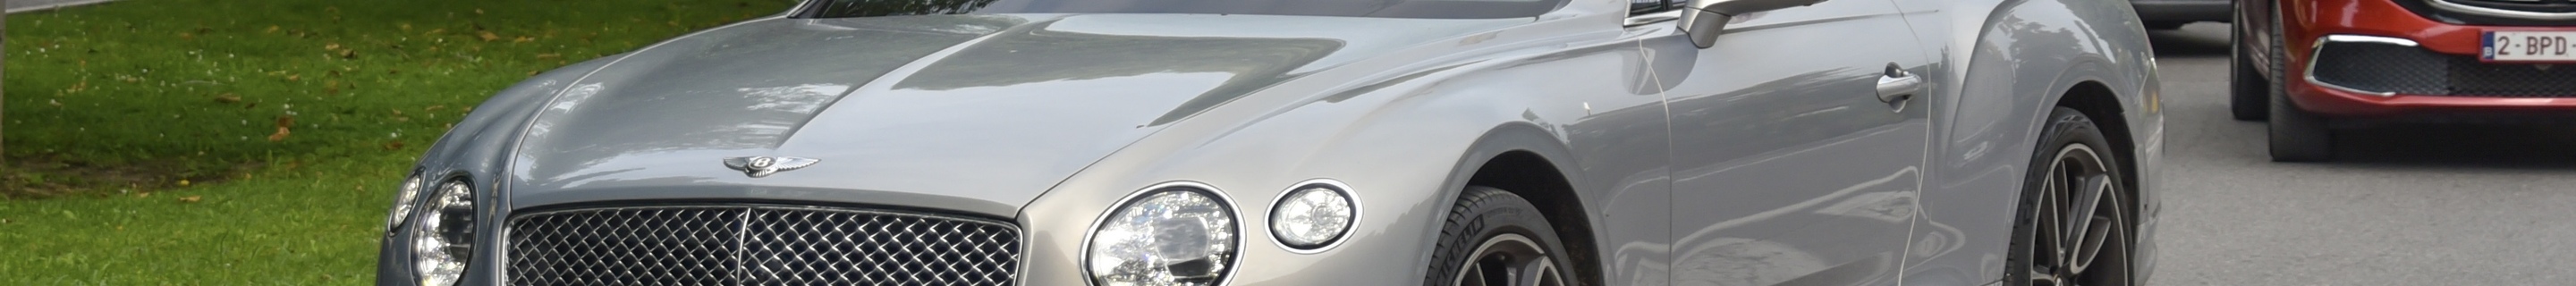 Bentley Continental GTC 2019